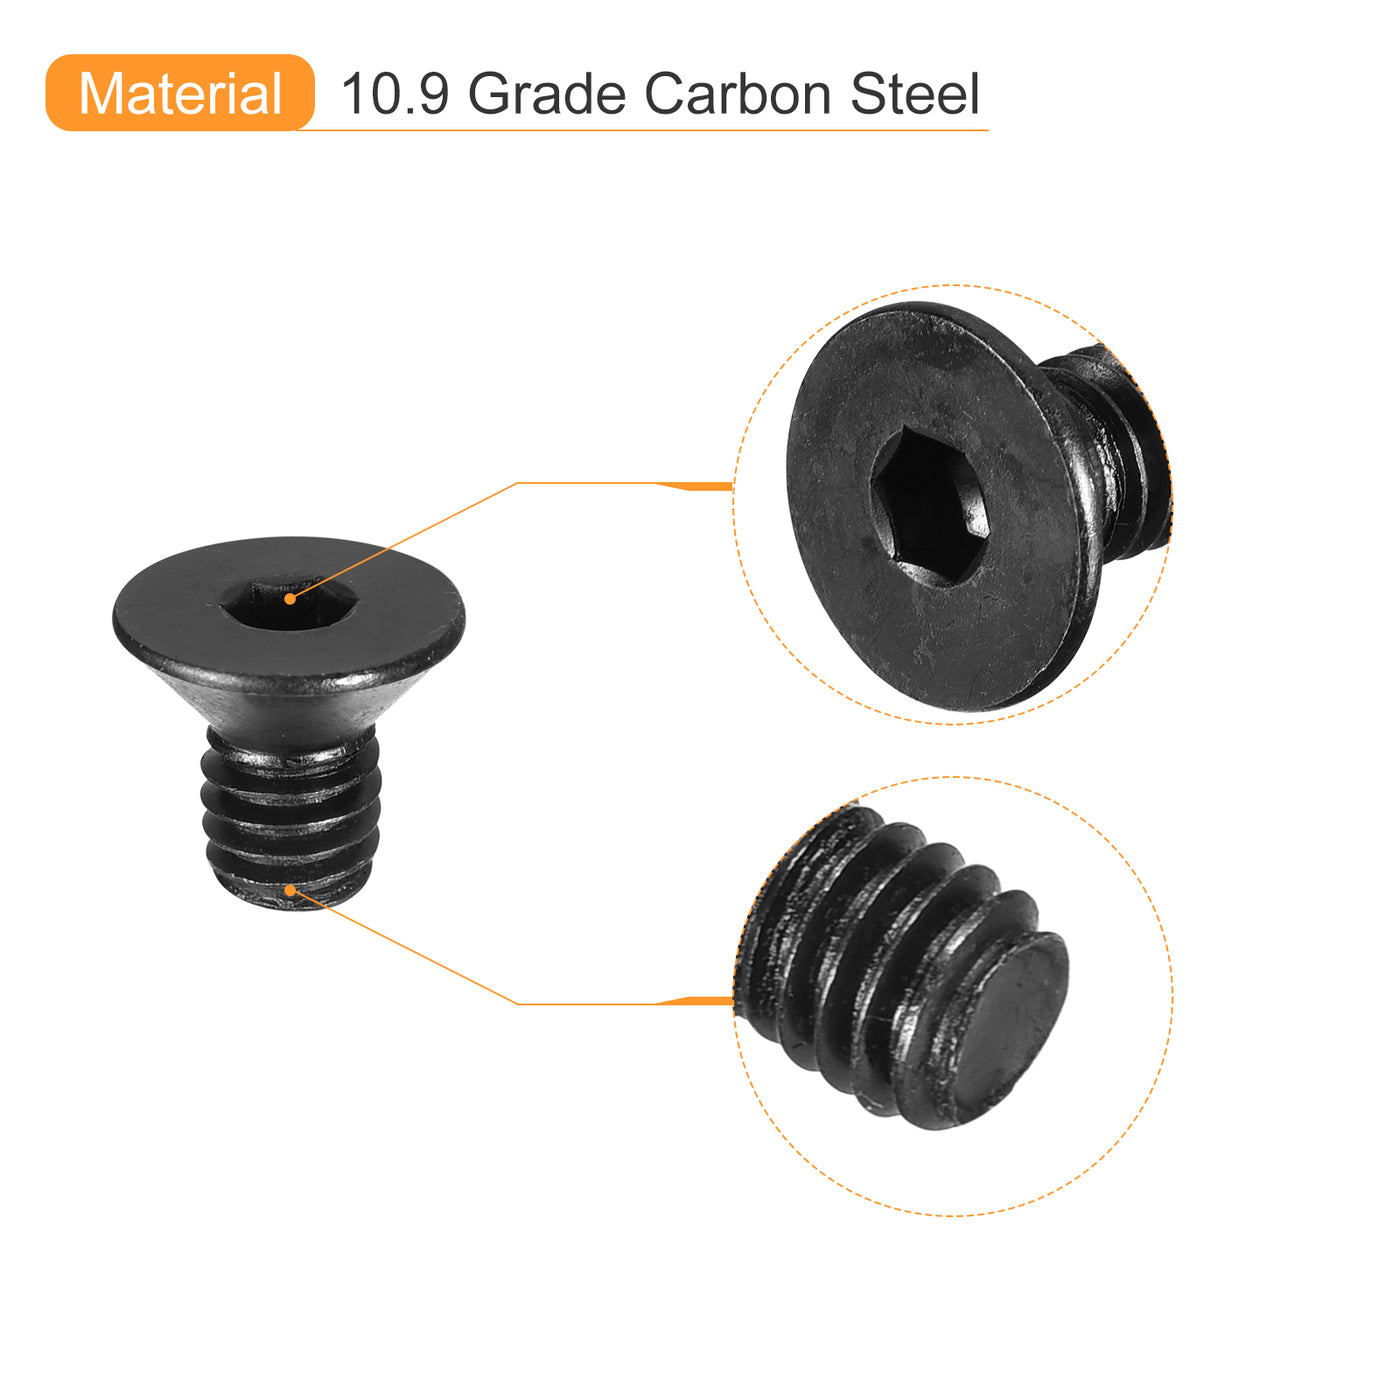 uxcell Uxcell 5/16-18x1/2" Flat Head Socket Cap Screws, 10.9 Grade Carbon Steel, 15PCS